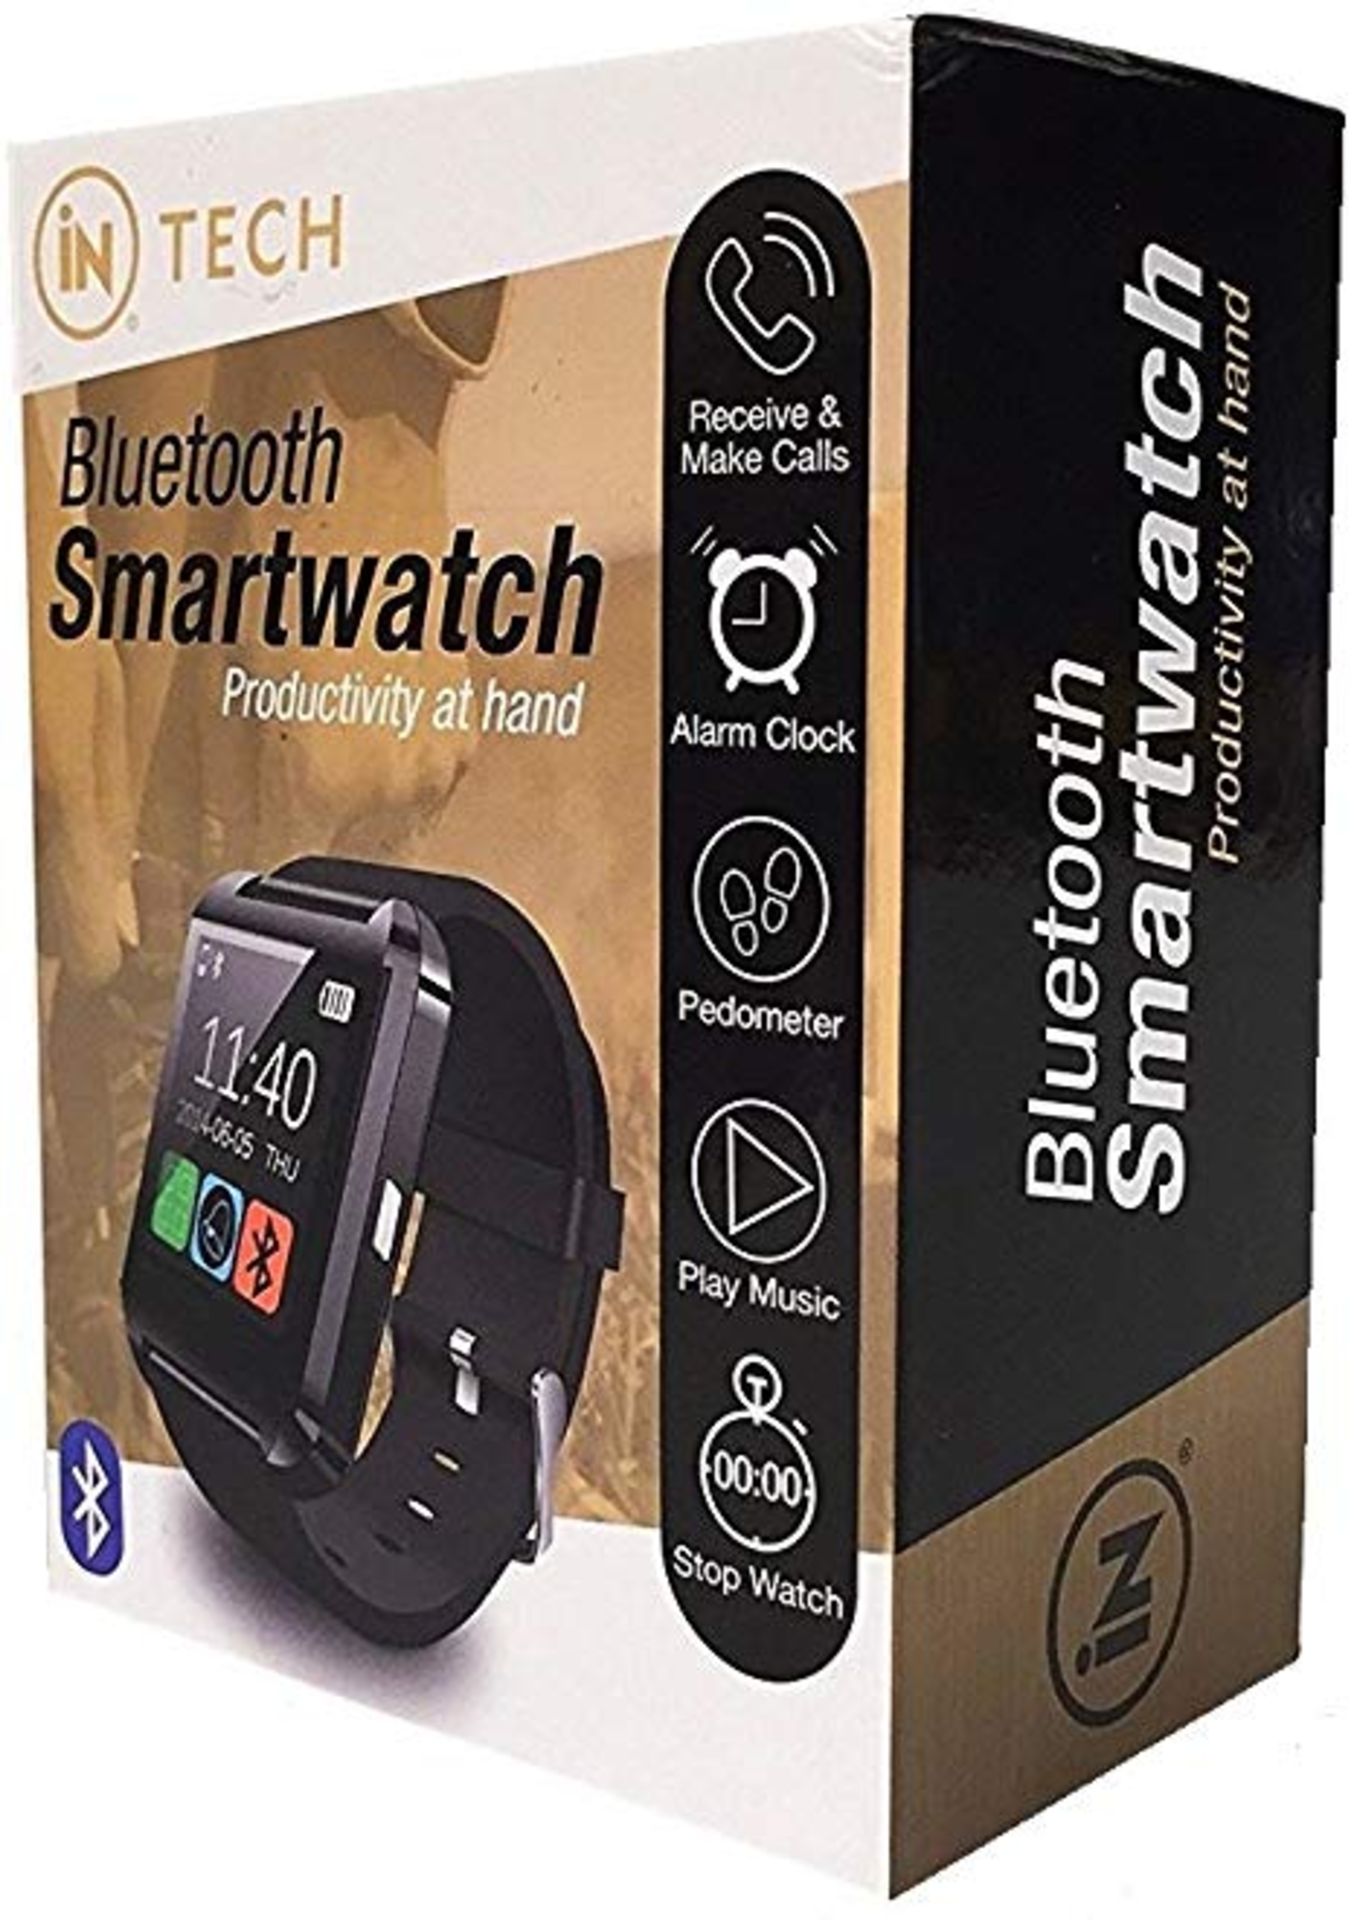 + VAT Brand New In Tech Bluetooth Smart Watch - Receive and Make Calls - Alarm Clock - Pedometer -